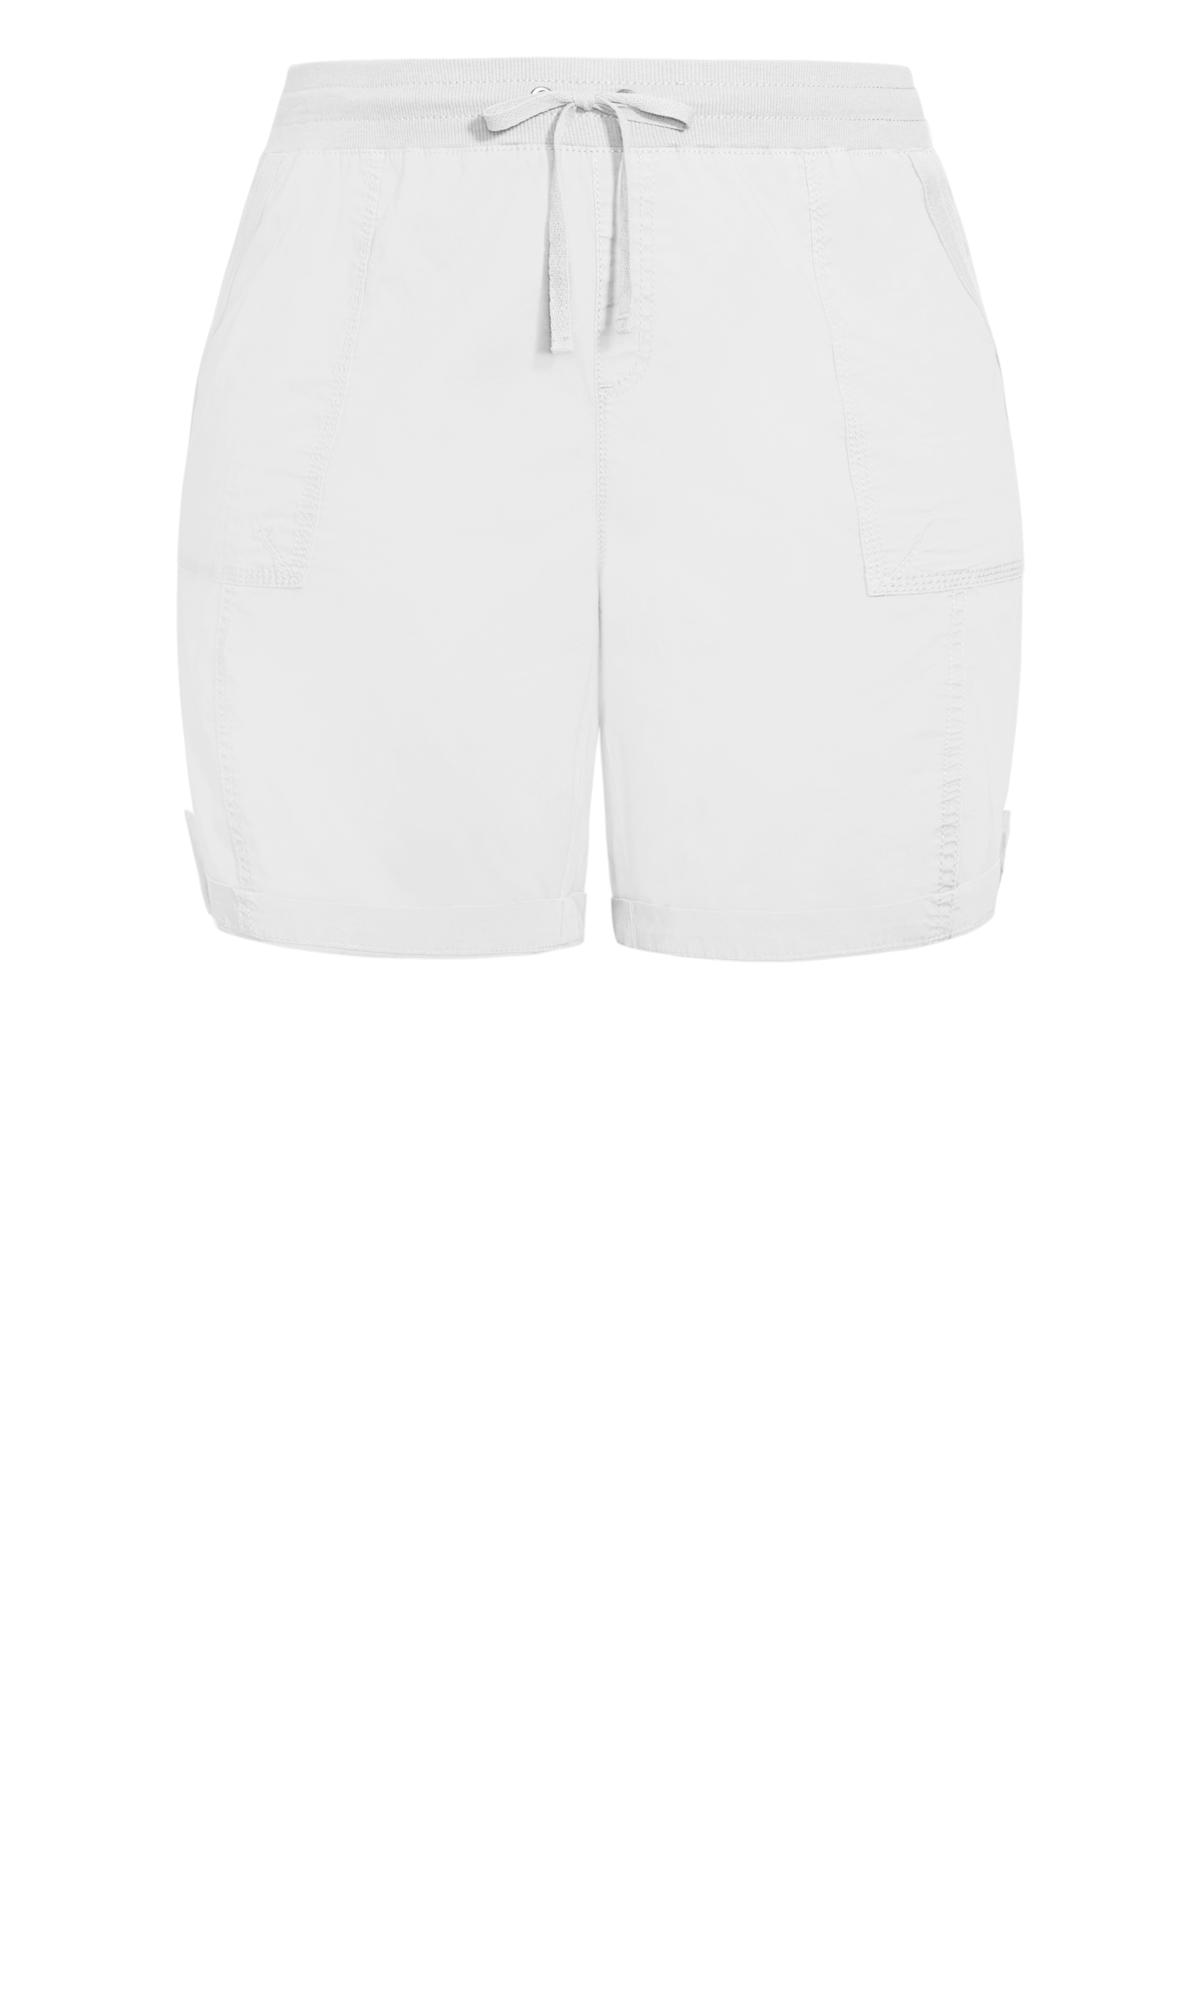 Cotton Casual White Short 2